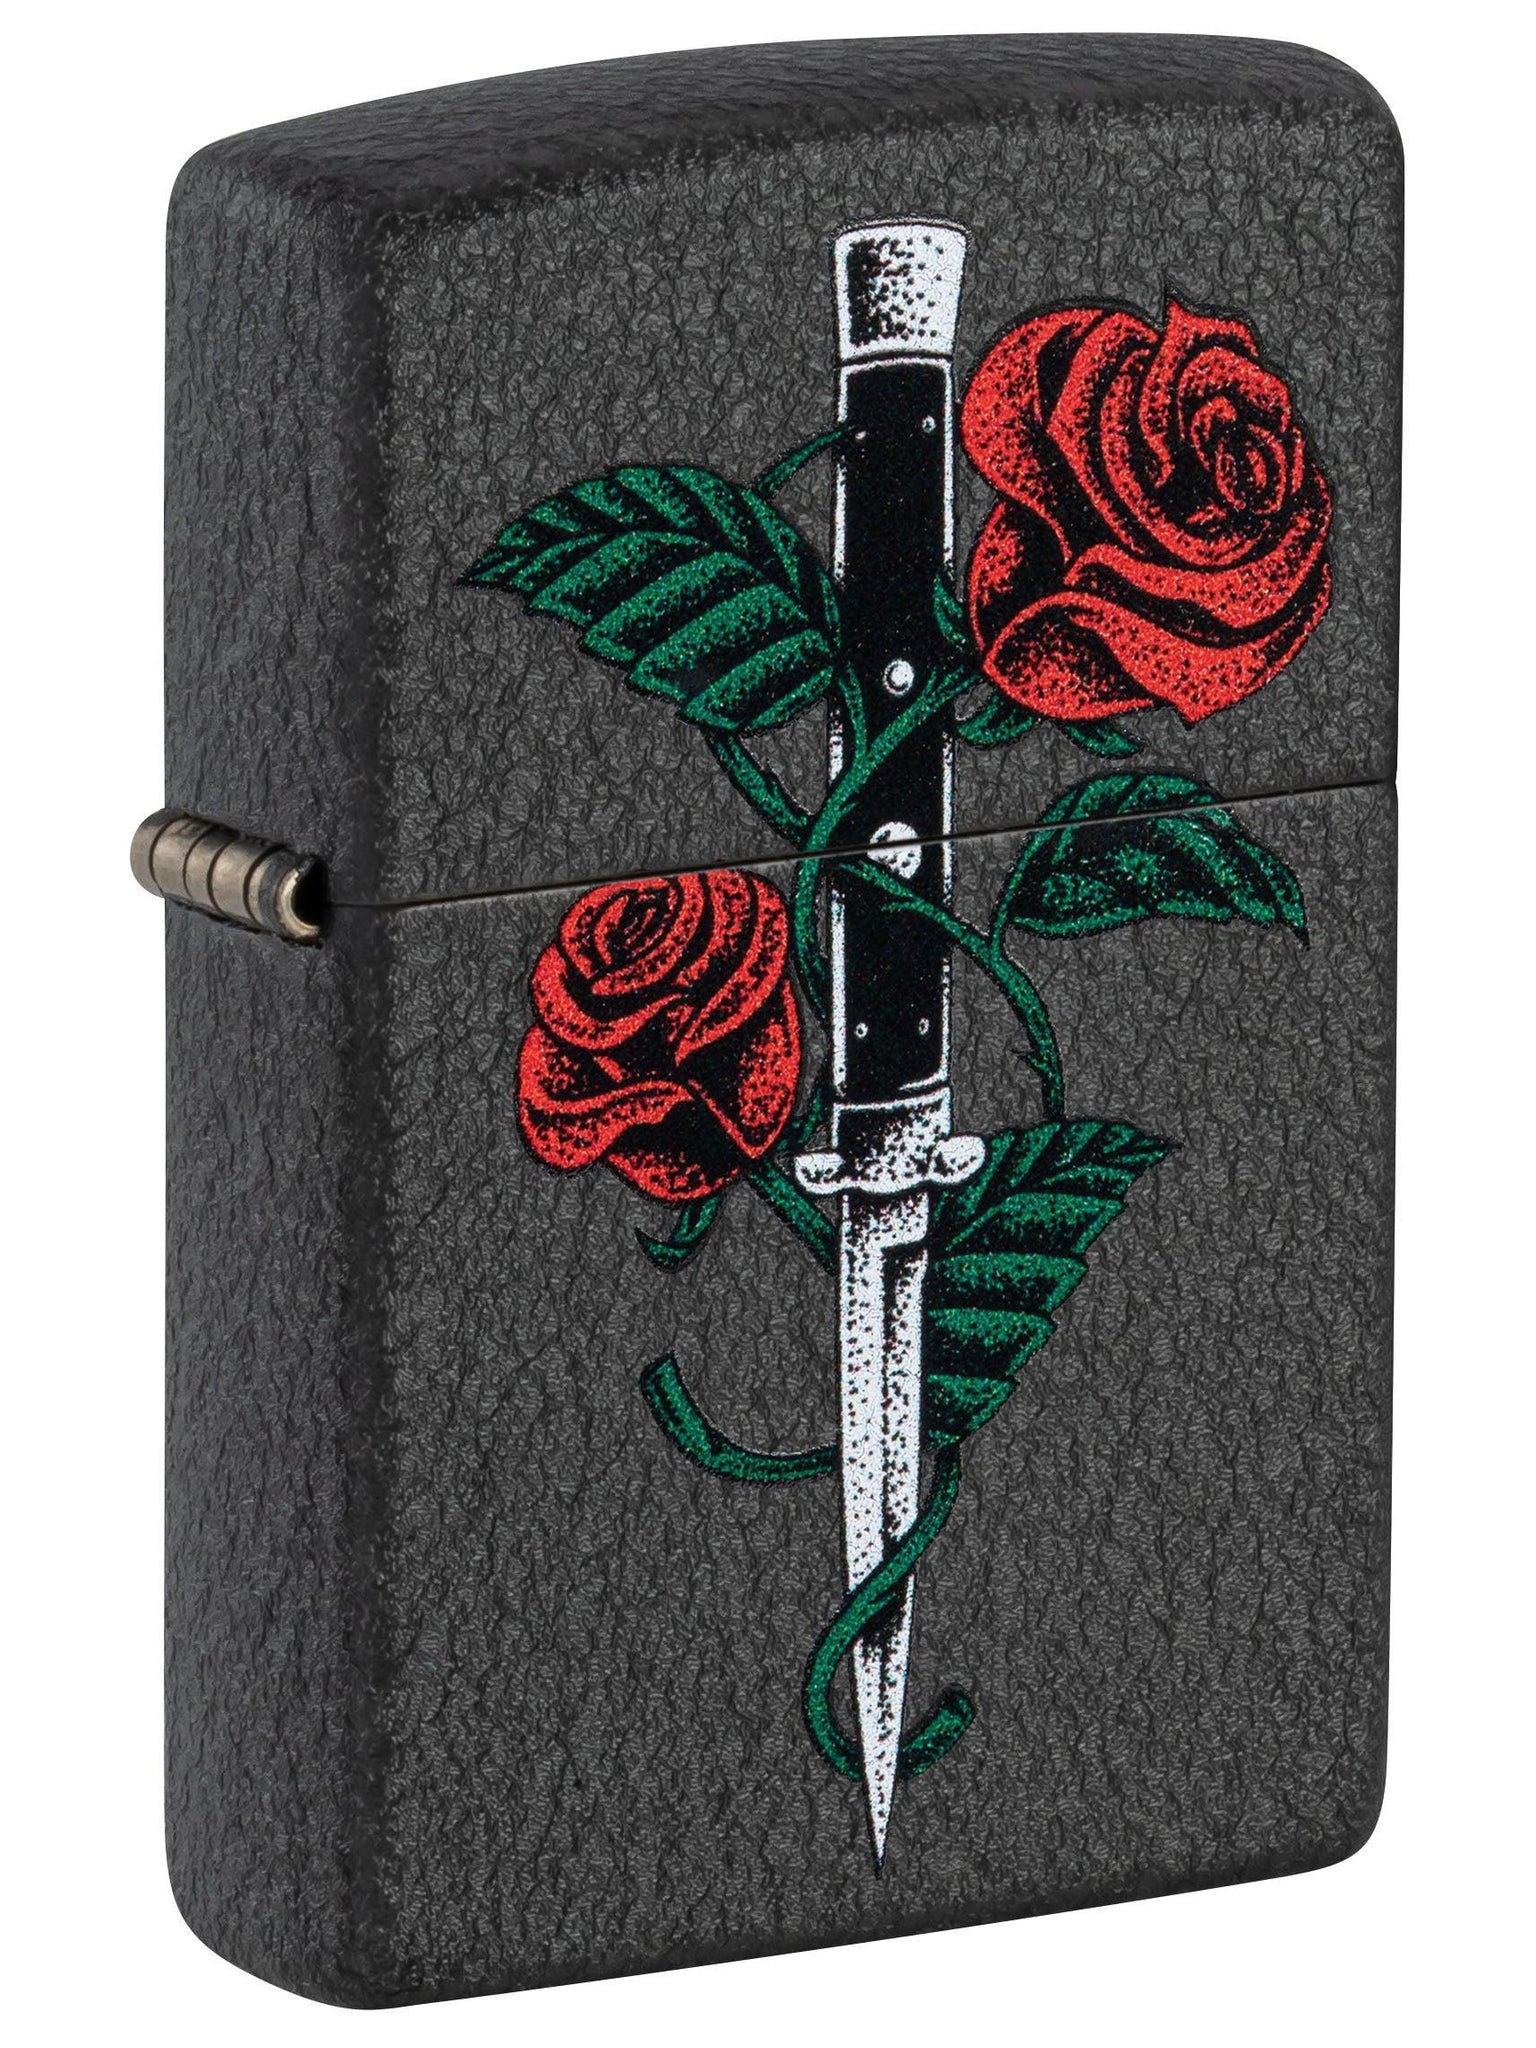 Zippo Lighter: Rose and Dagger Tattoo - Black Crackle 49778